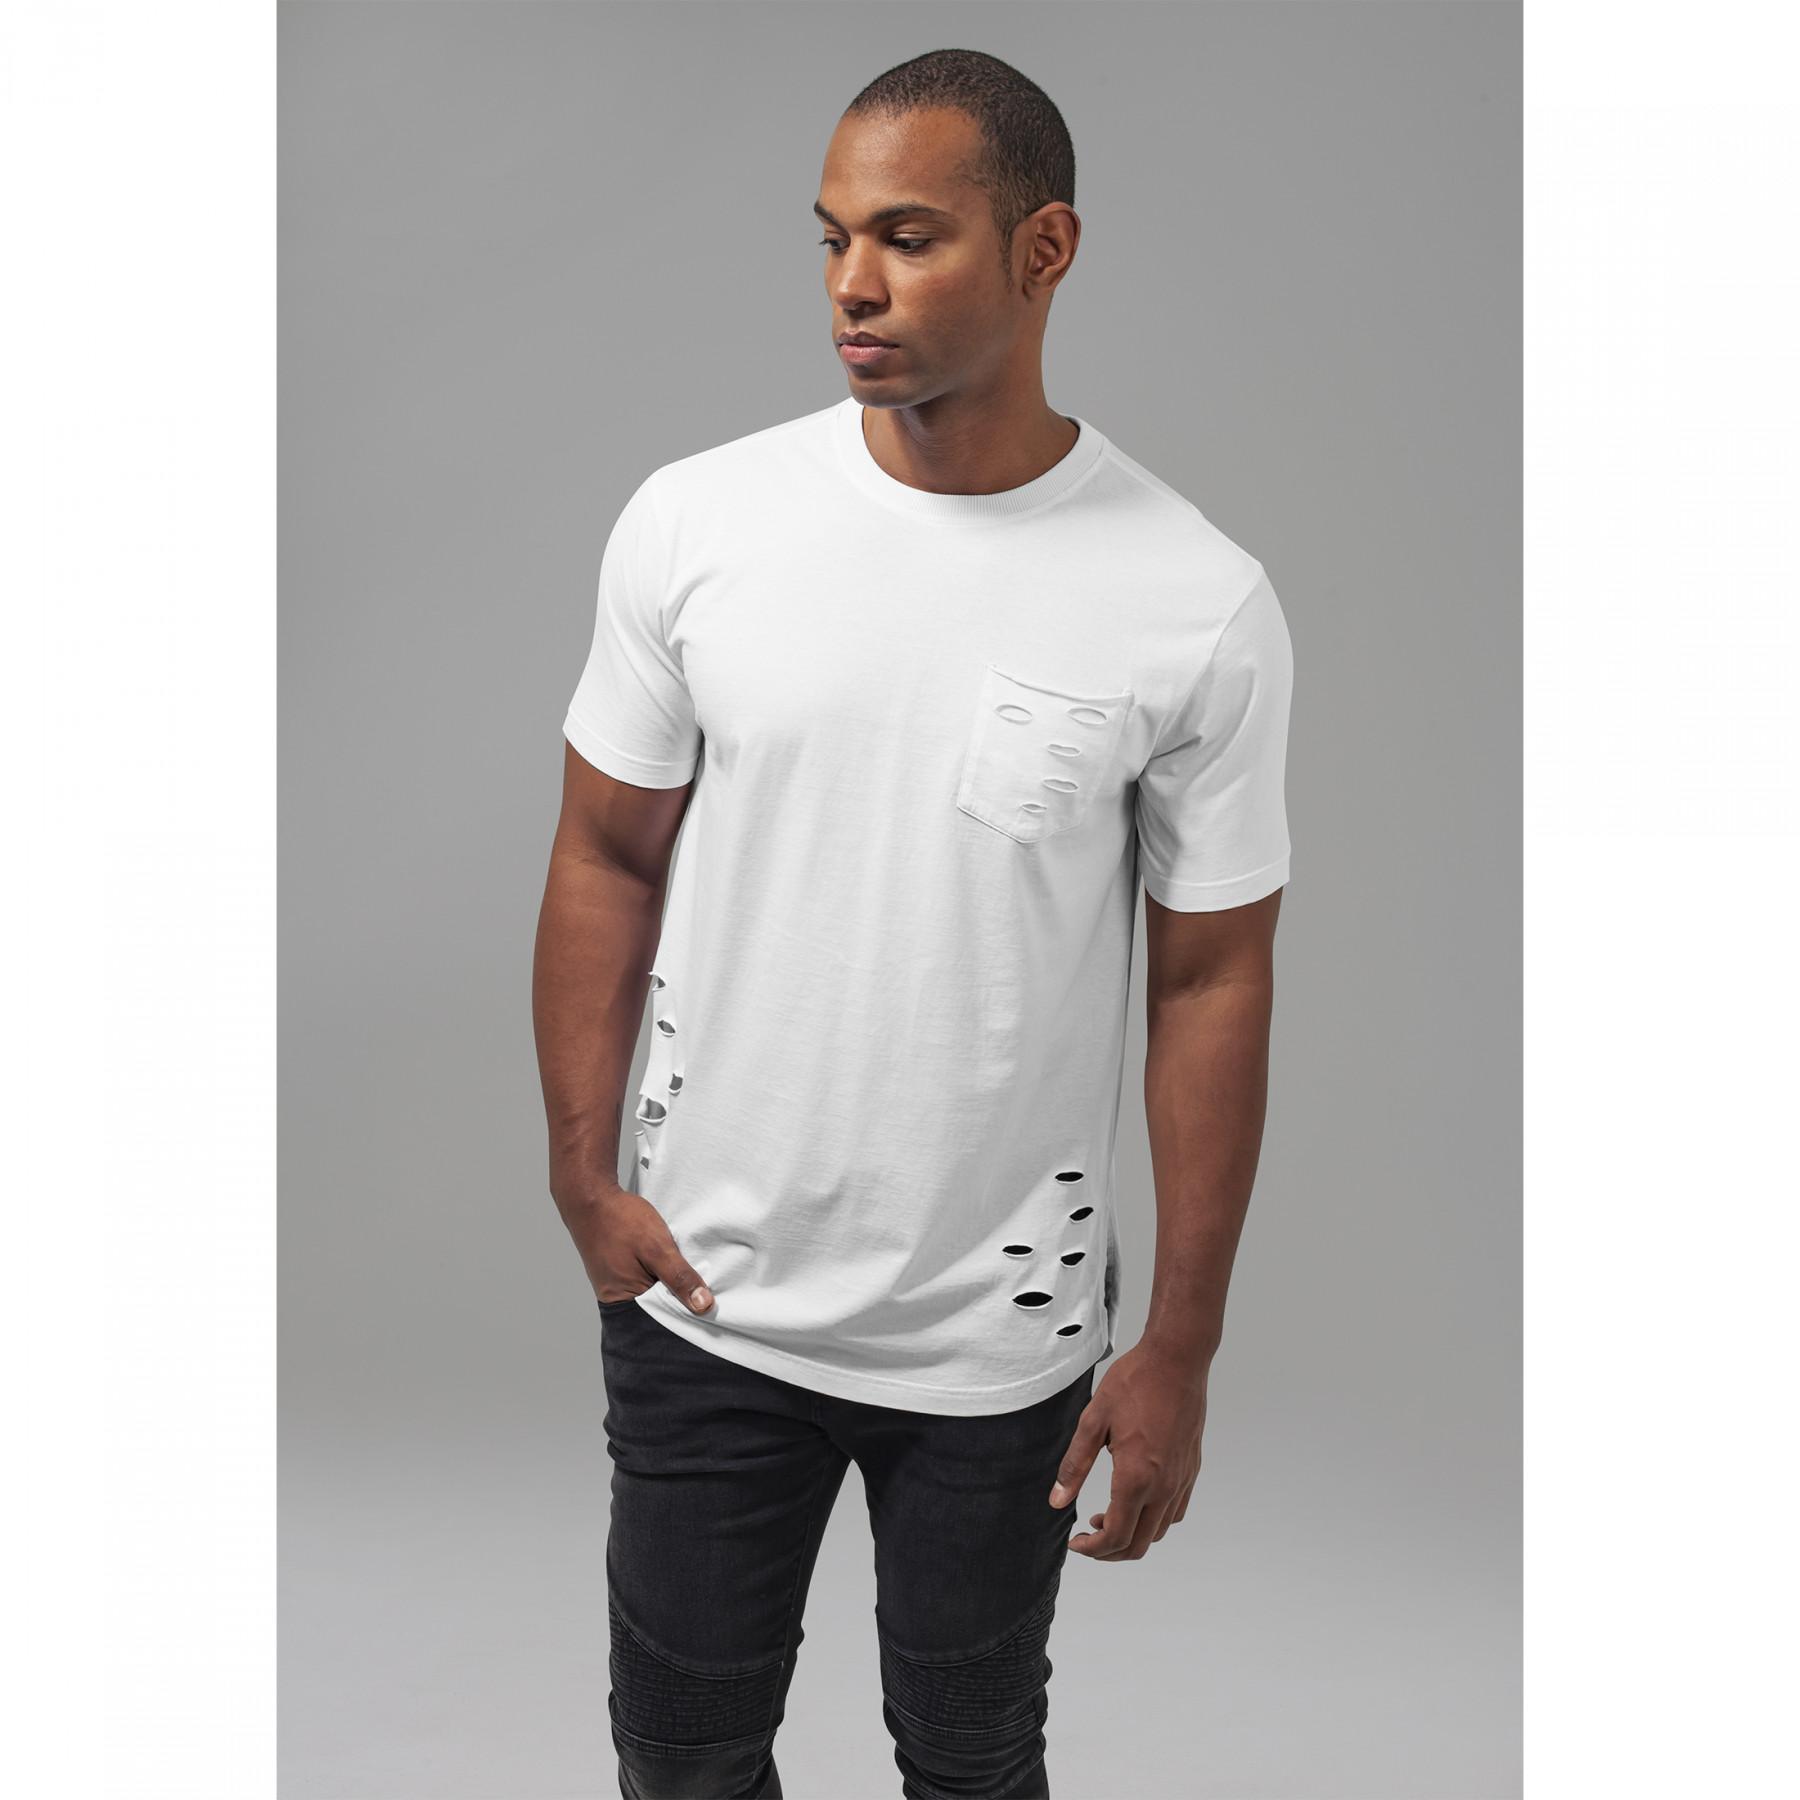 Urban Classic ripped pocket T-shirt - Urban Classics - Top Brands - Men